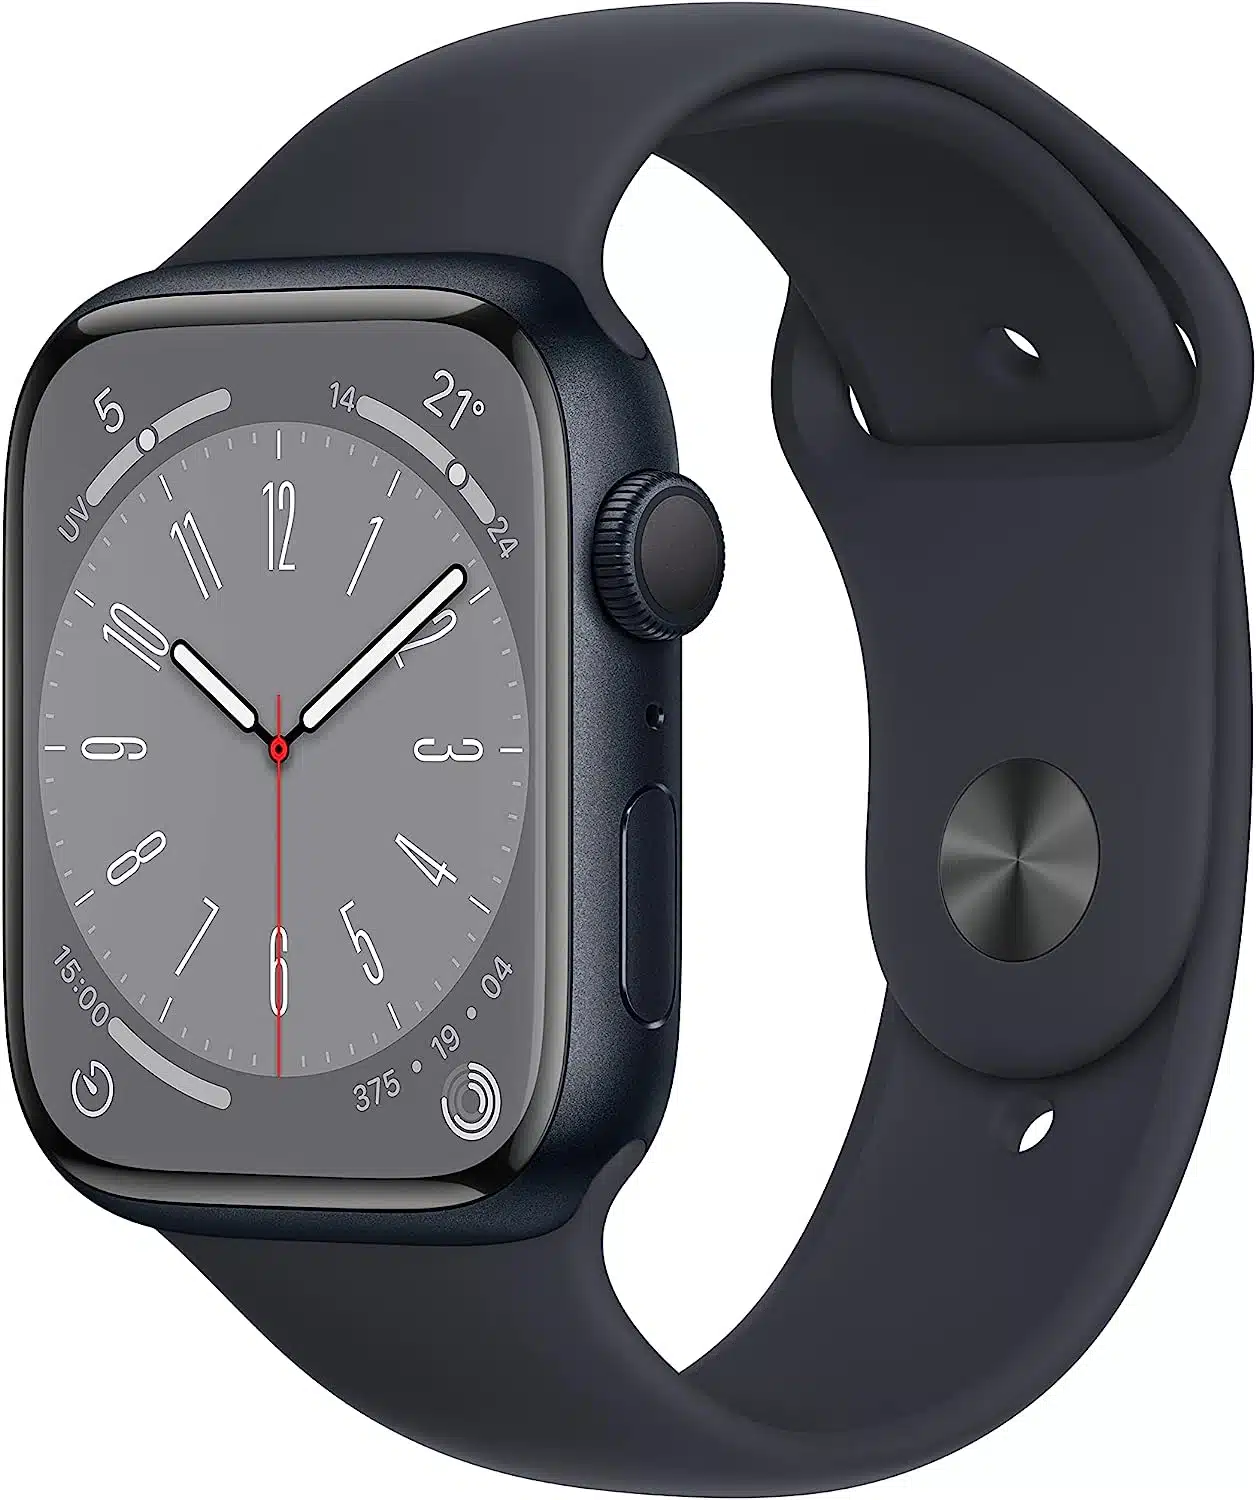 Apple watch offerte amazon